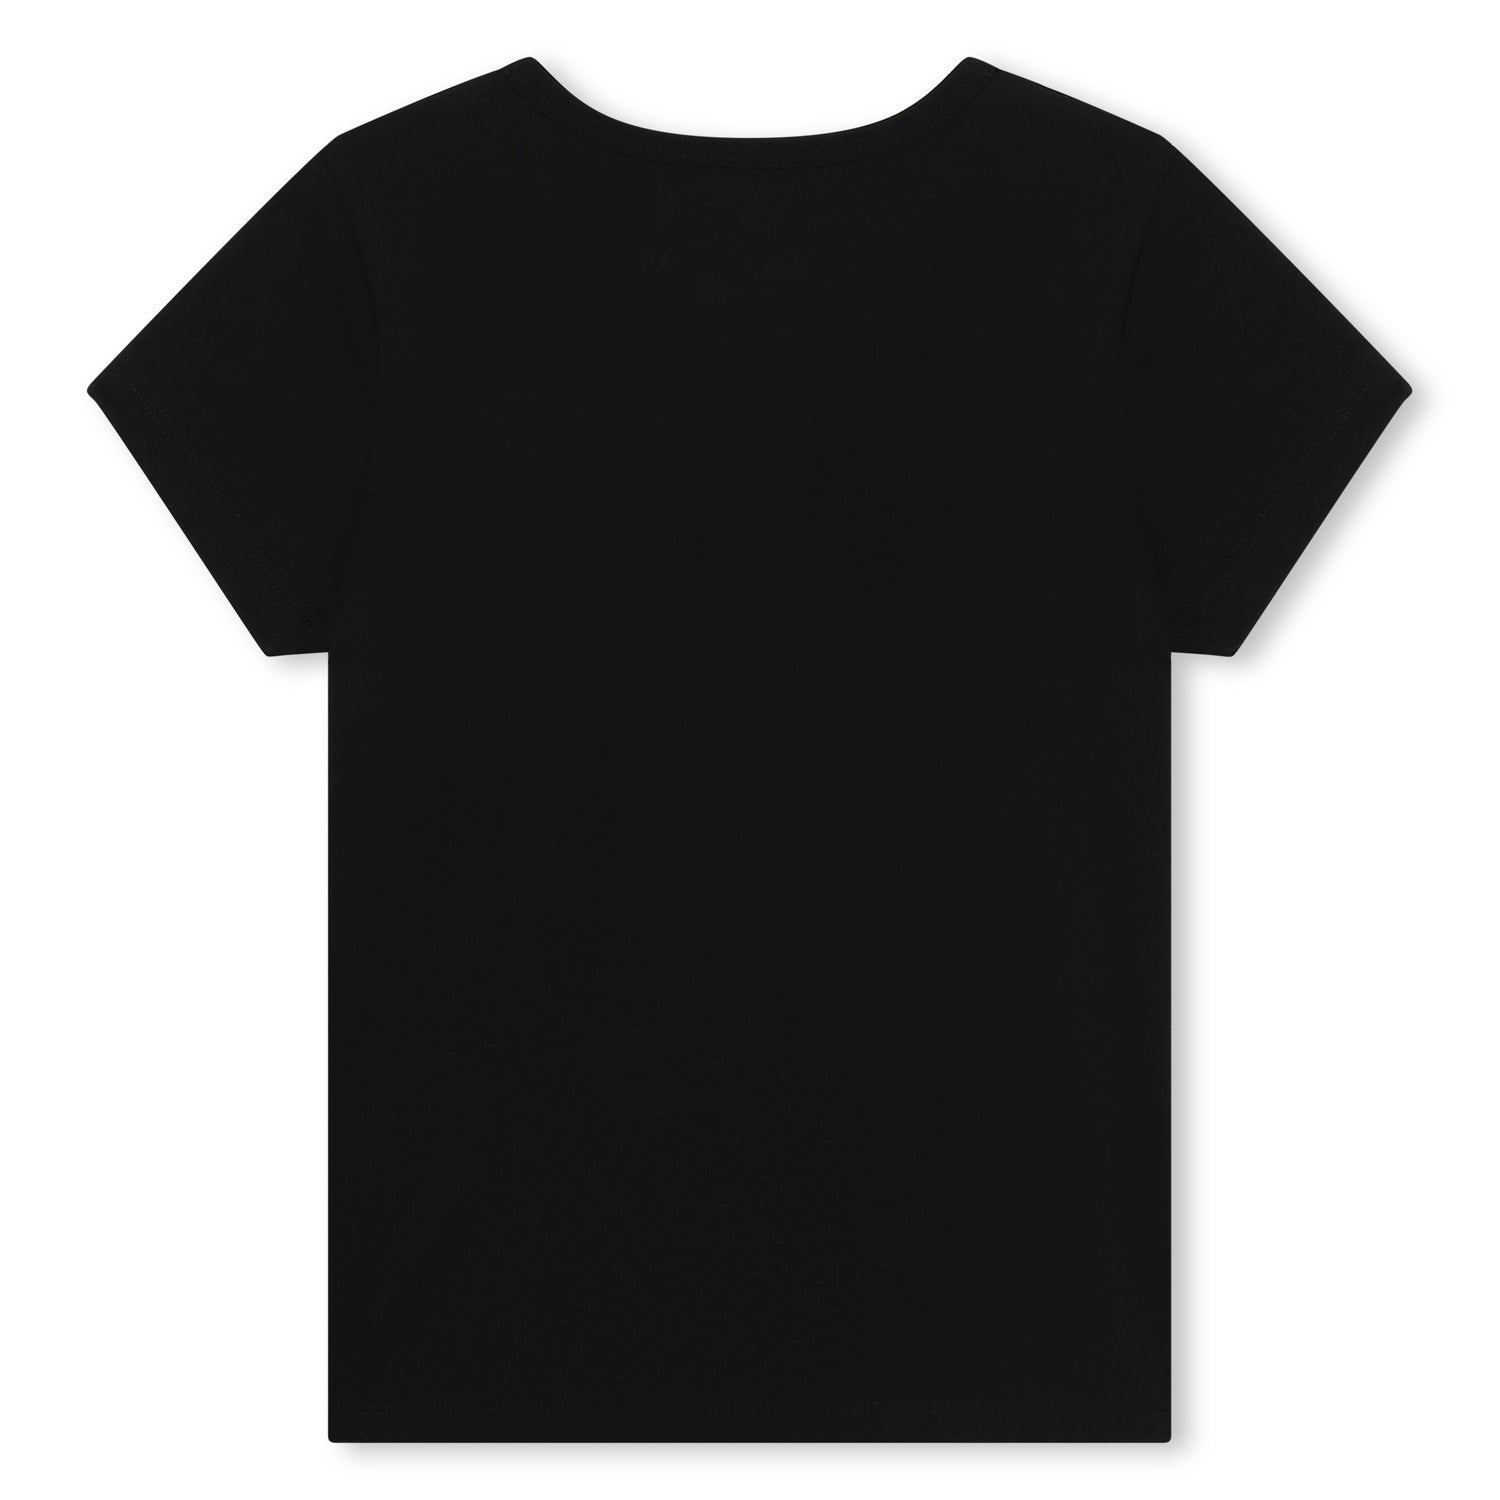 Sonia Rykiel Black Logo Tee Shirt